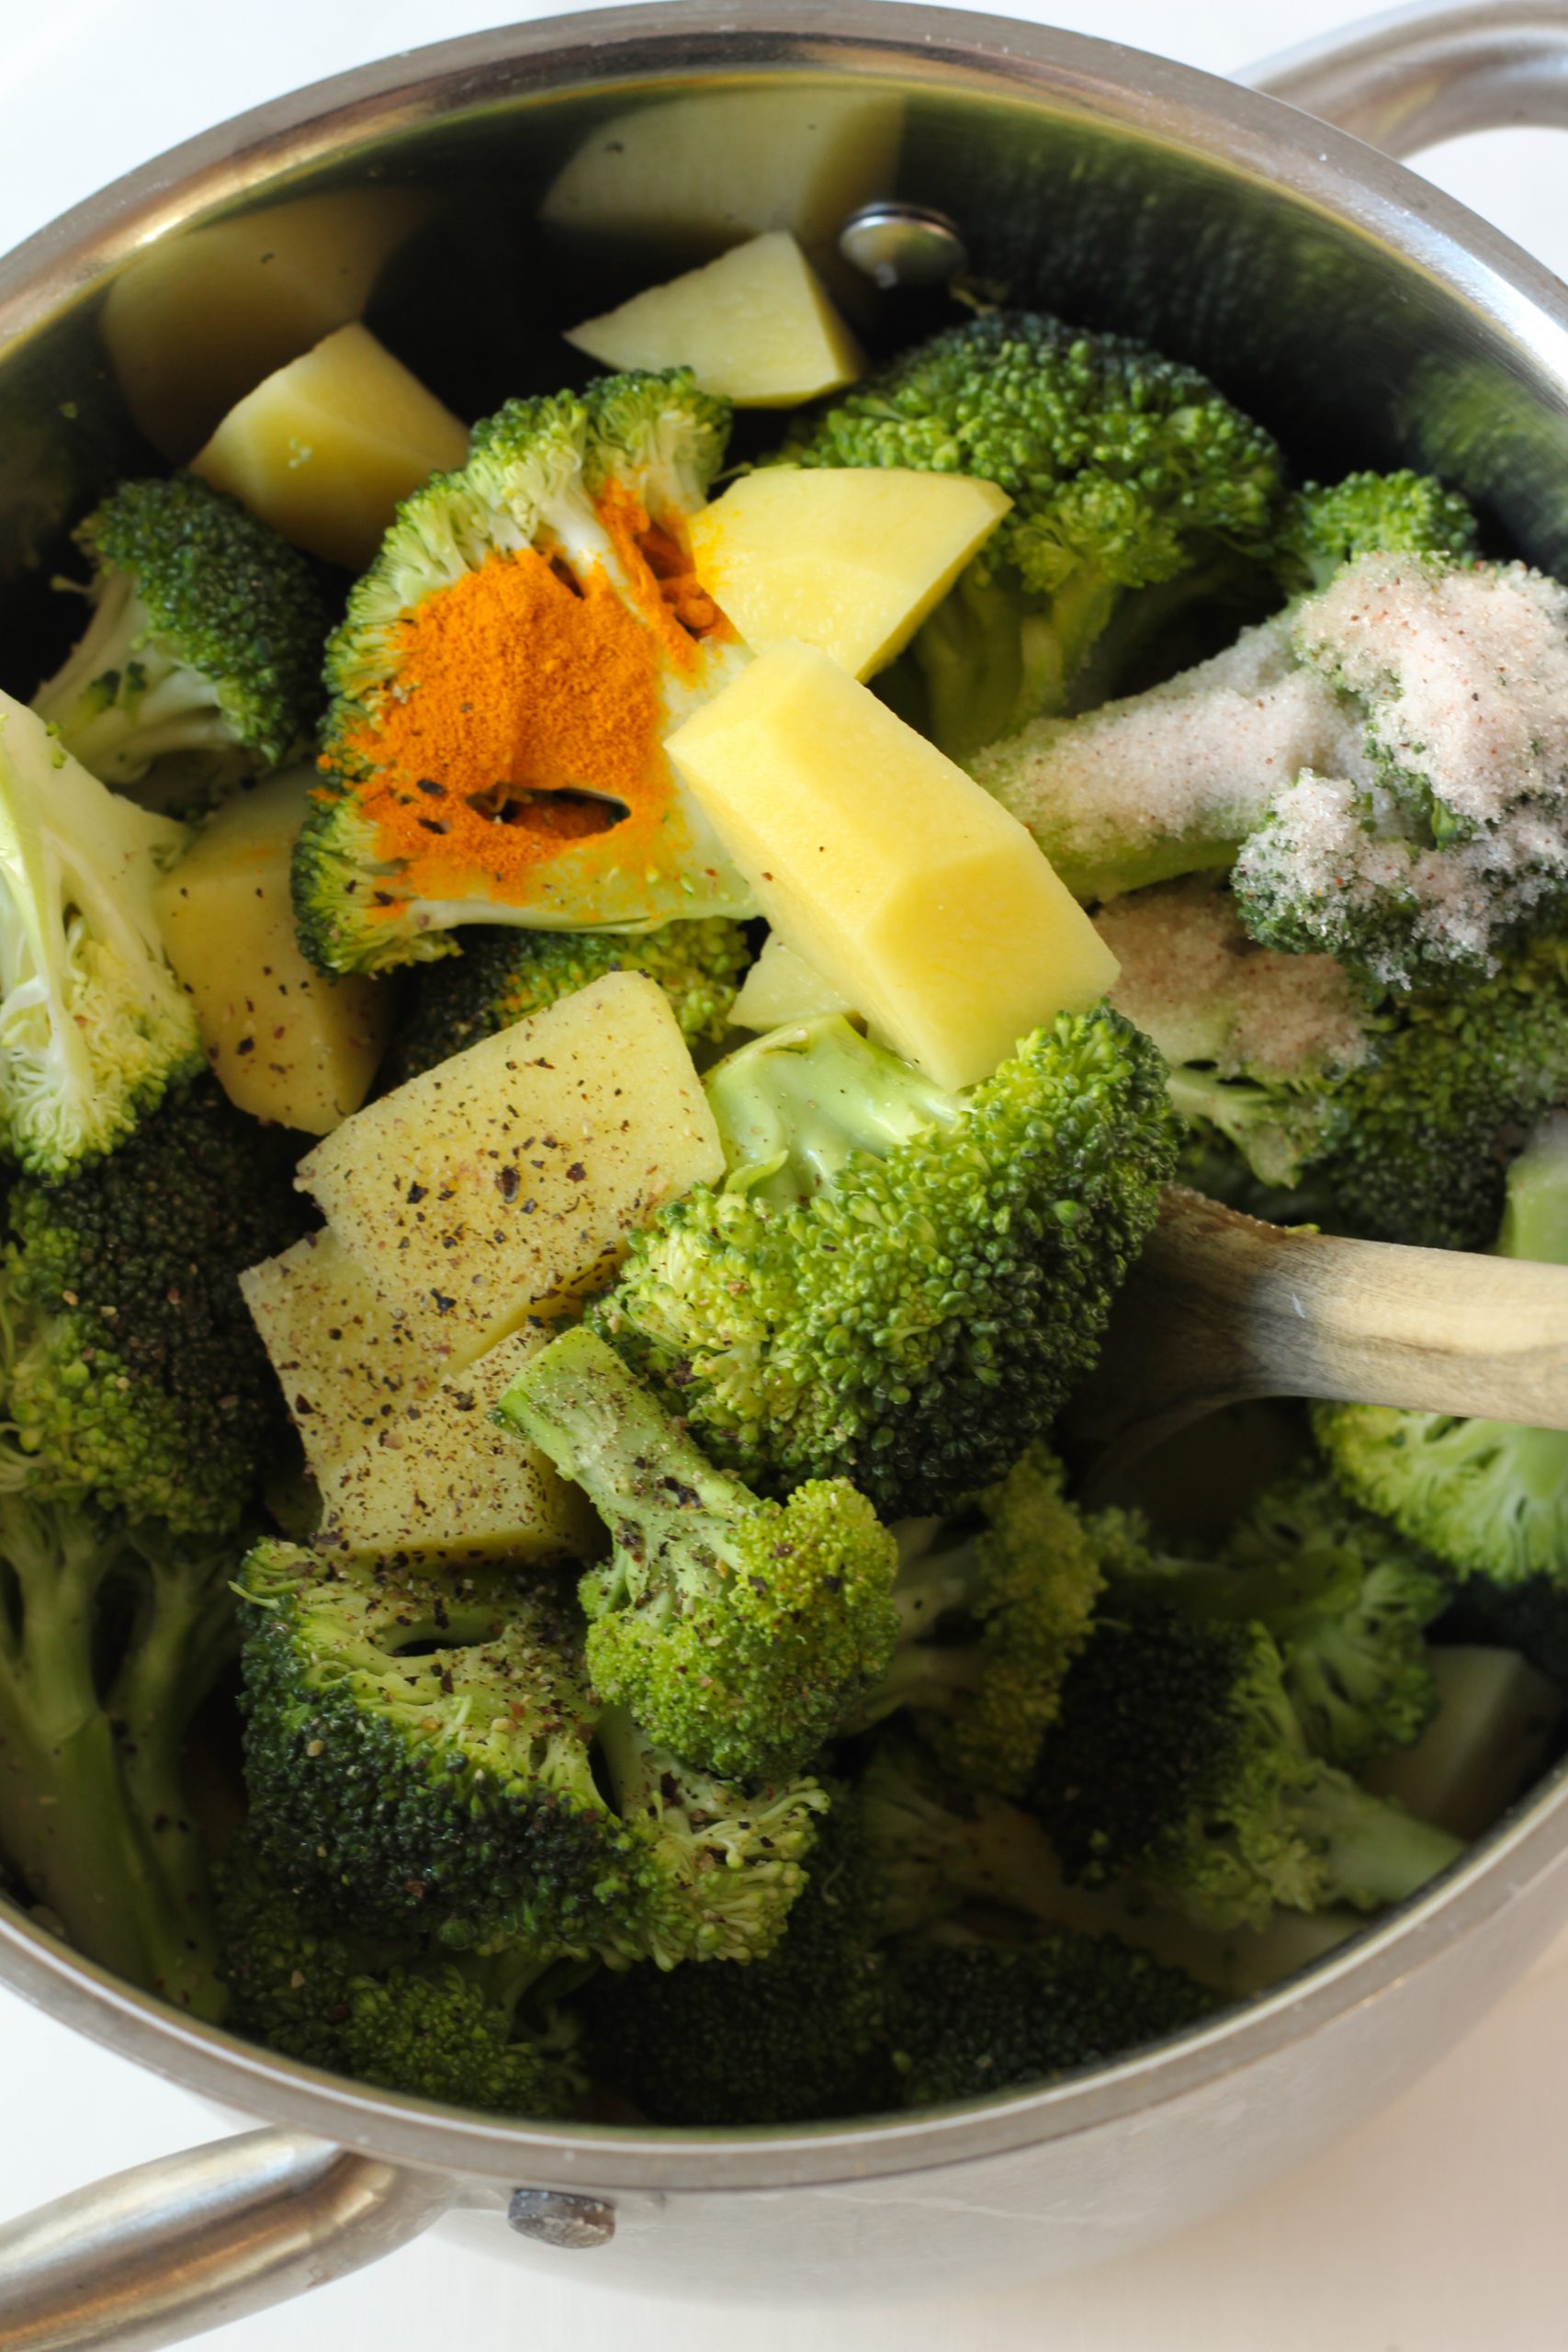 Sautéed shallot, garlic, broccoli, potatoes with herbs